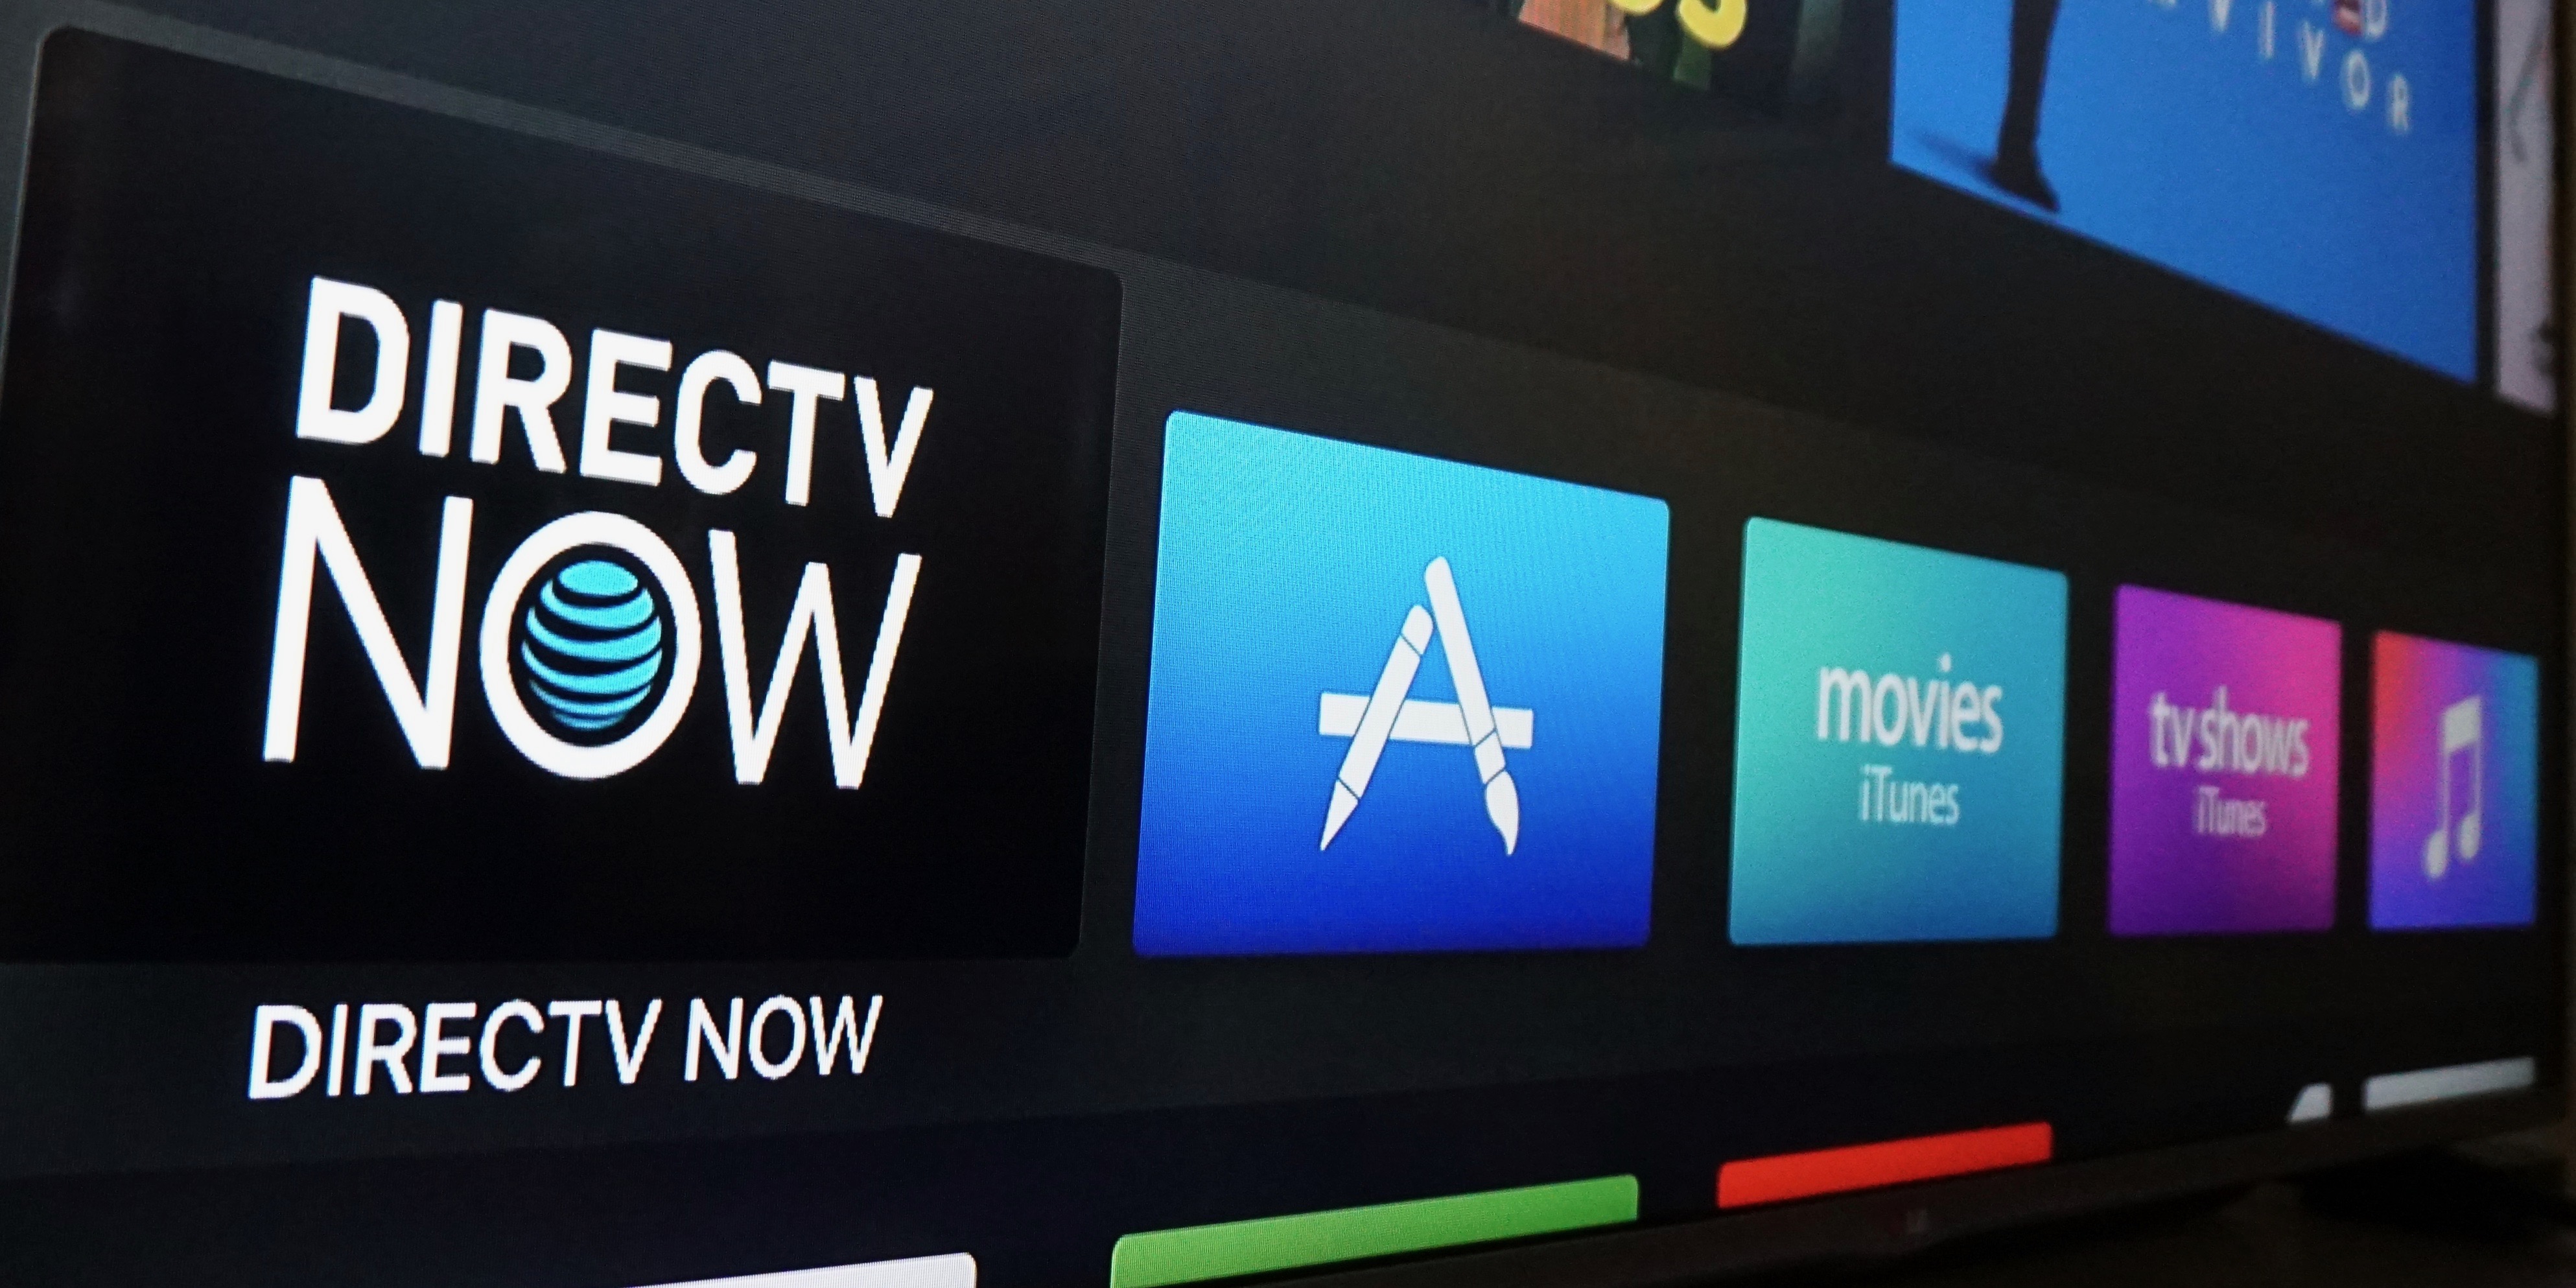 direct tv app for mac